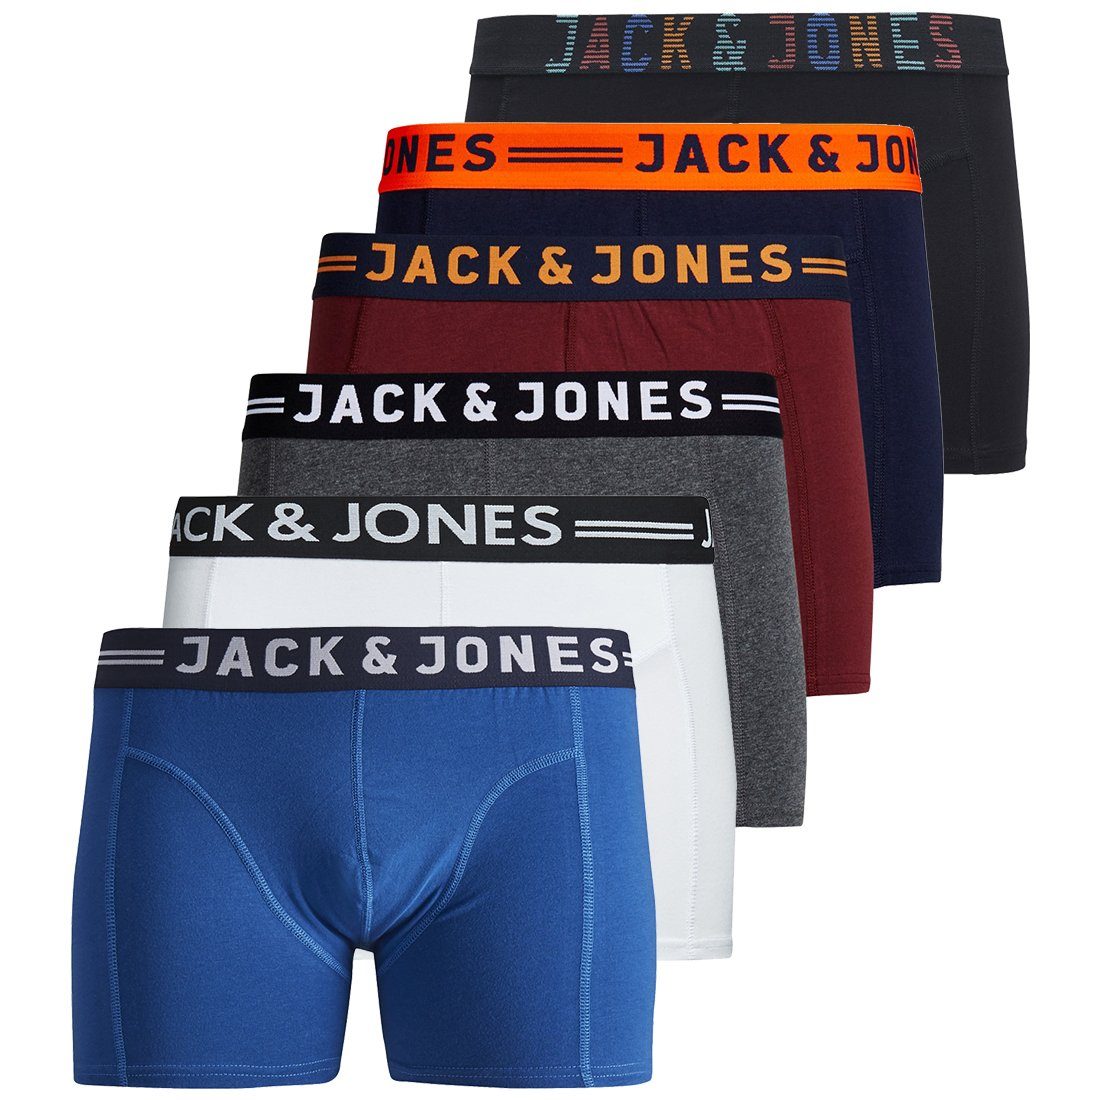 Boxershorts Mehrfarbig3 & S JONES Jack XL Unterhose L Herren Boxershorts XXL Pack 6er JACK Jones Marke Männer Short M